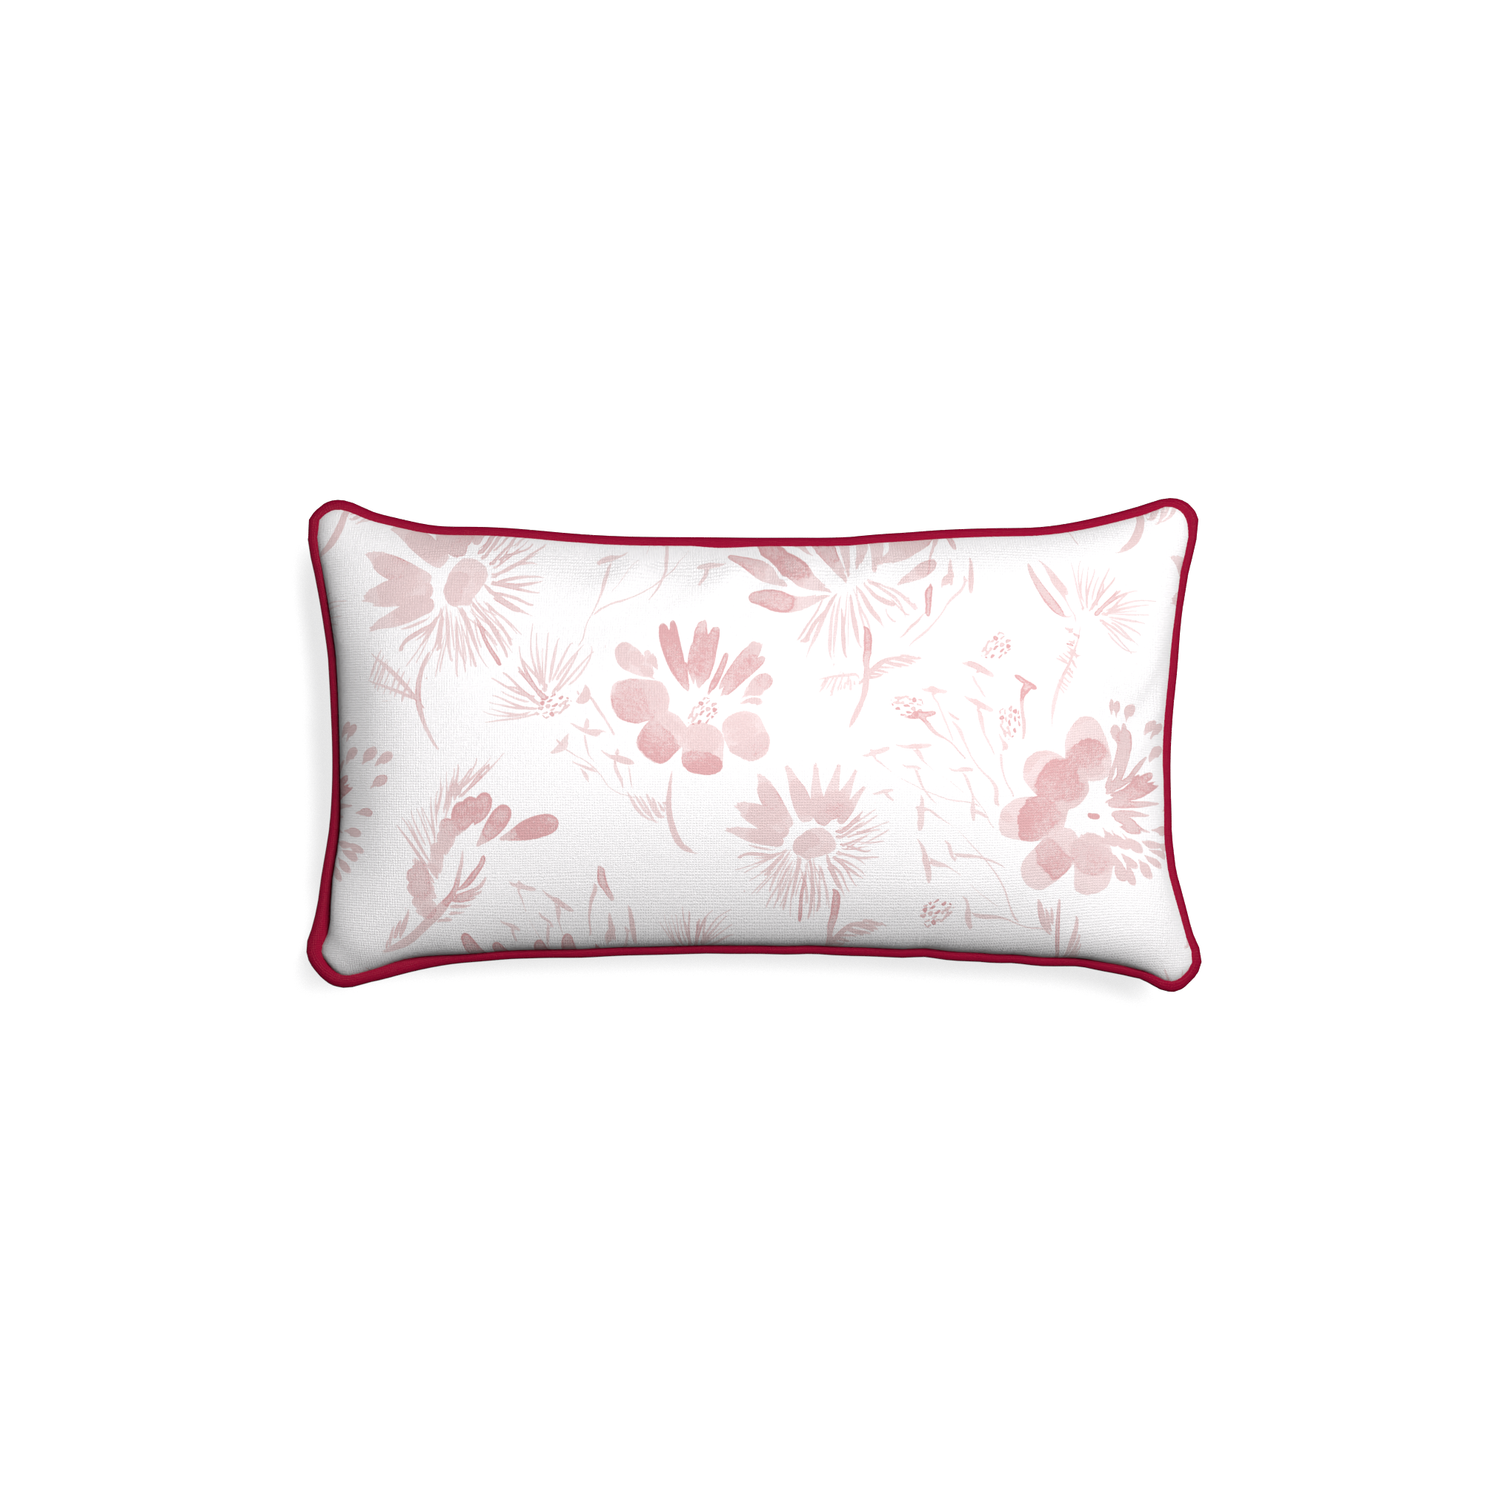 Petite-lumbar blake custom pink floralpillow with raspberry piping on white background